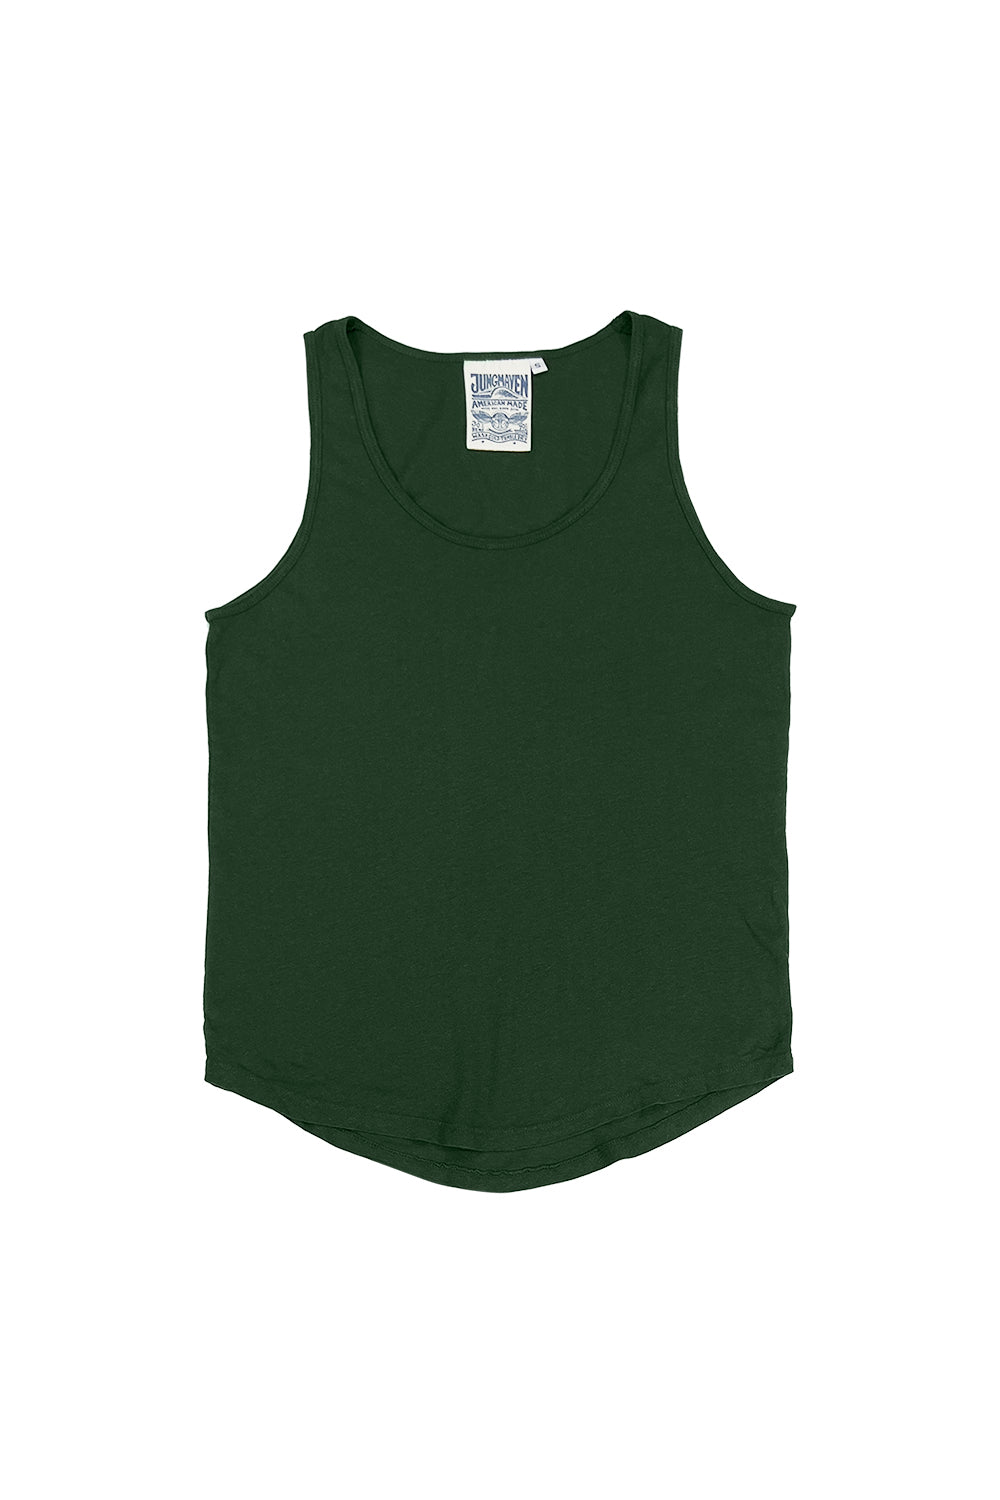 Truro Tank Top | Jungmaven Hemp Clothing & Accessories / Color: Hunter Green